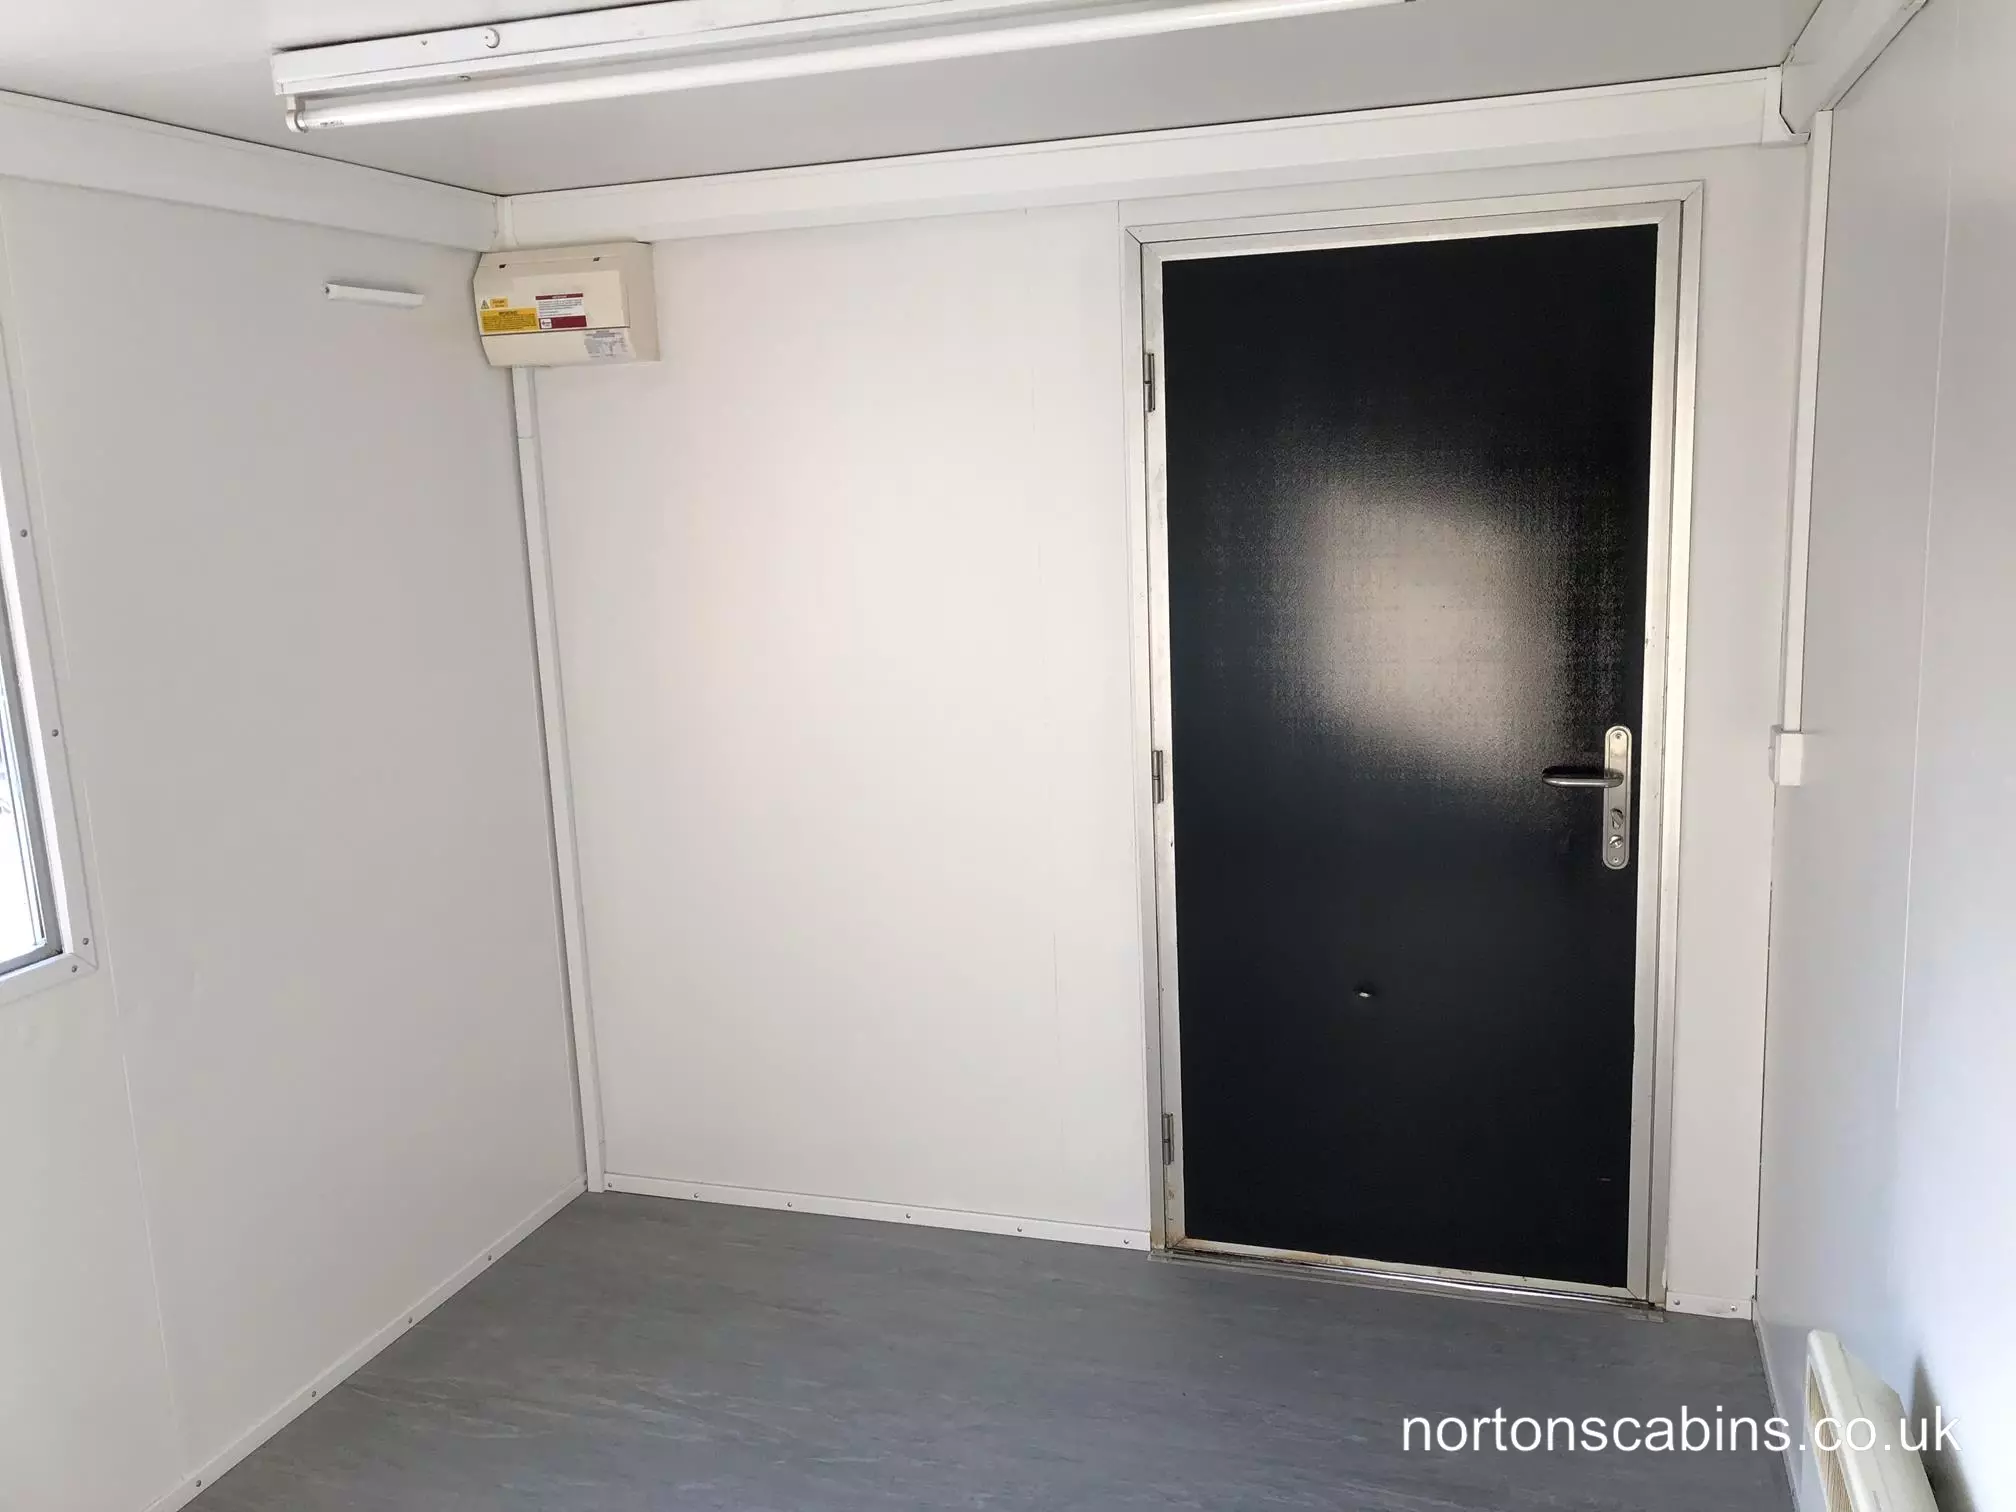 Ref: Nor248 16ftx9ft portable office toilet £6,950 +VAT